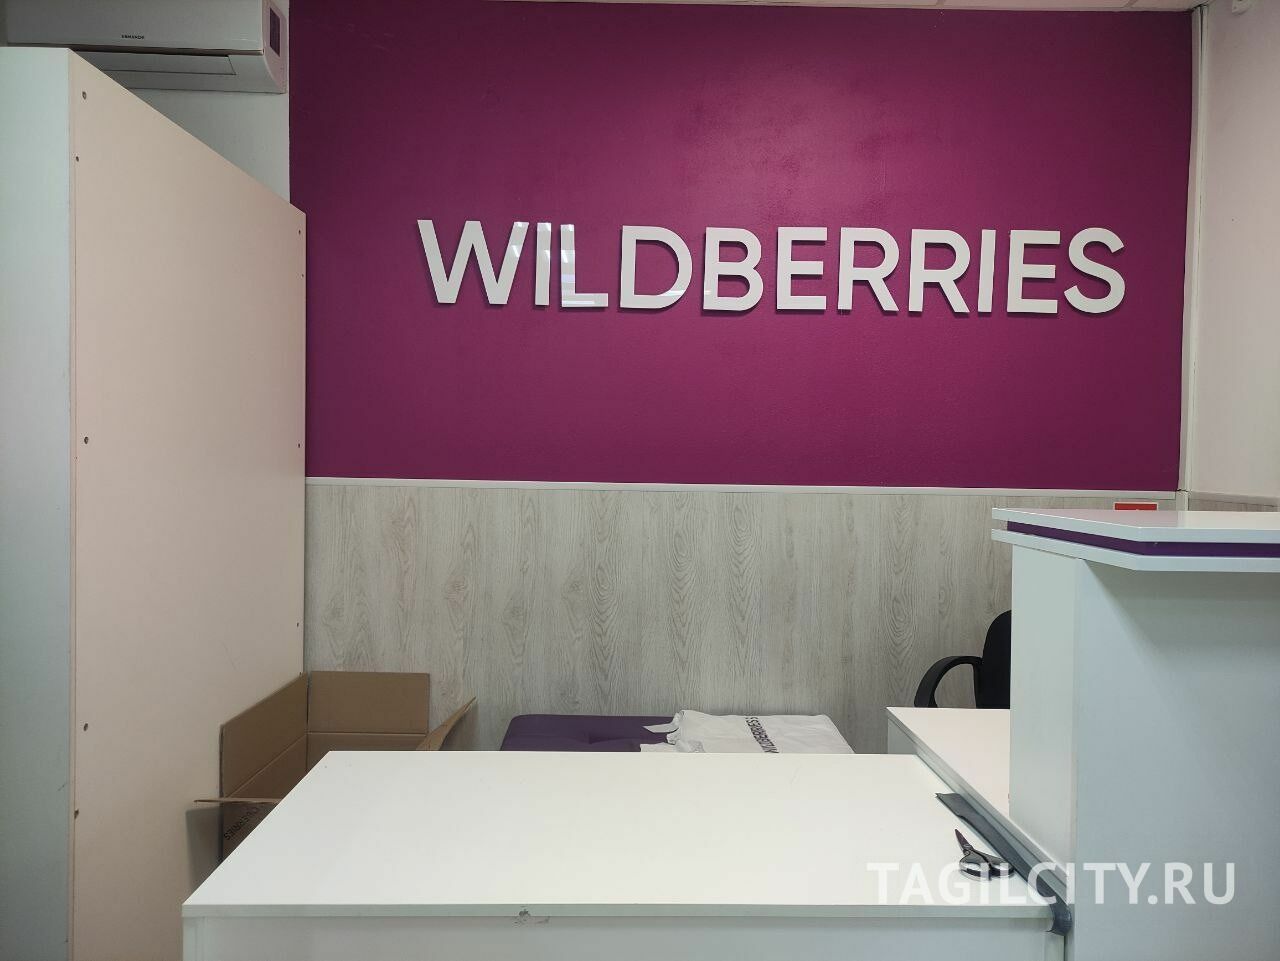 Сотрудники Wildberries в Нижнем Тагиле 